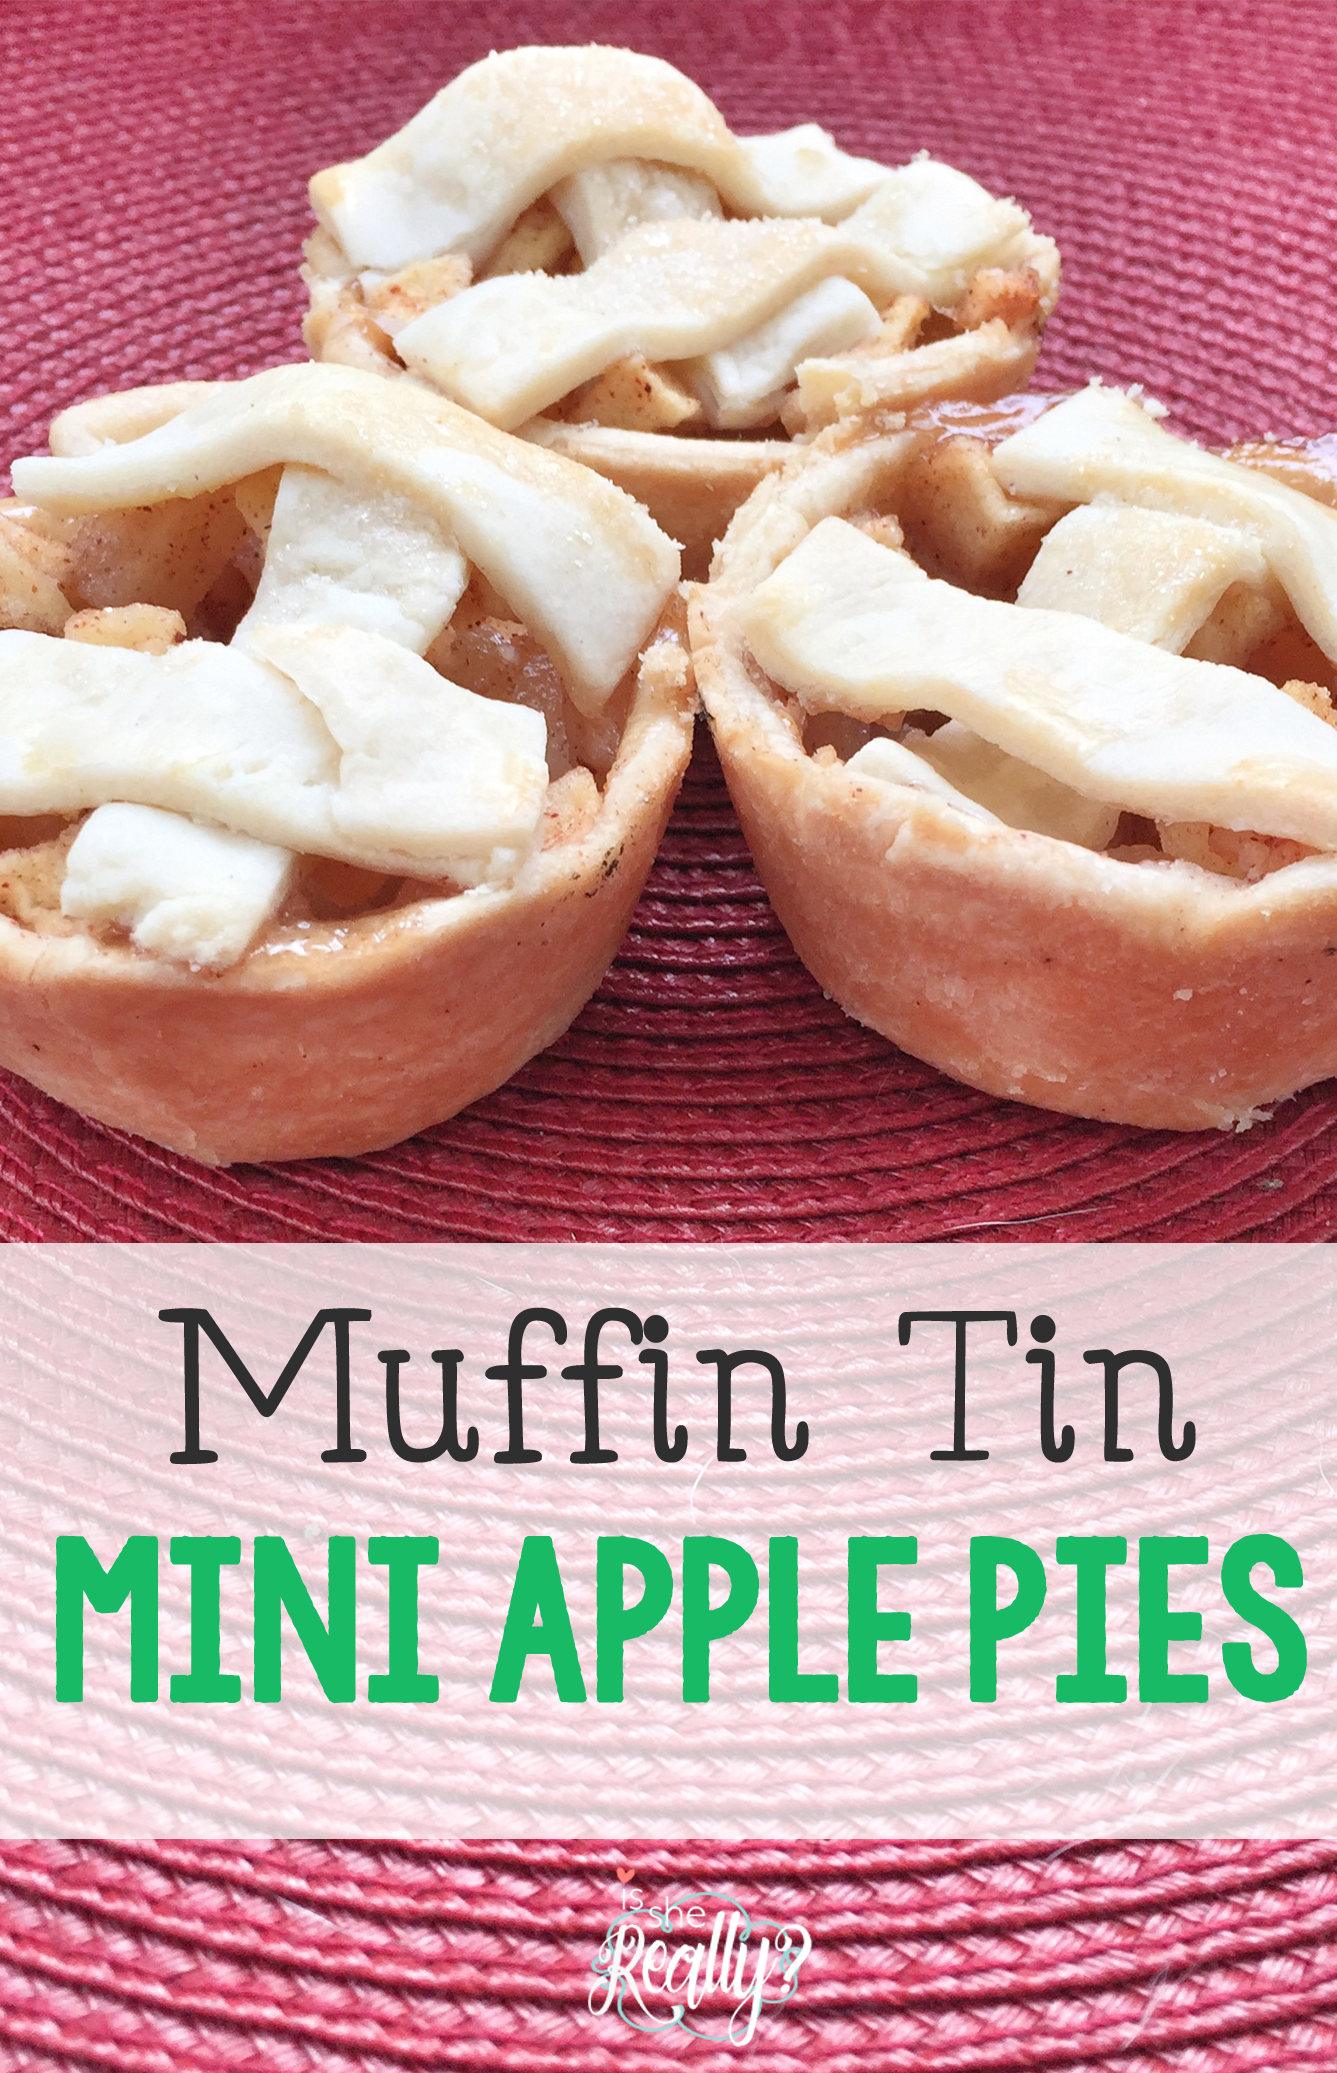 Muffin tin mini apple pies #thanksgiving @ginaekirk